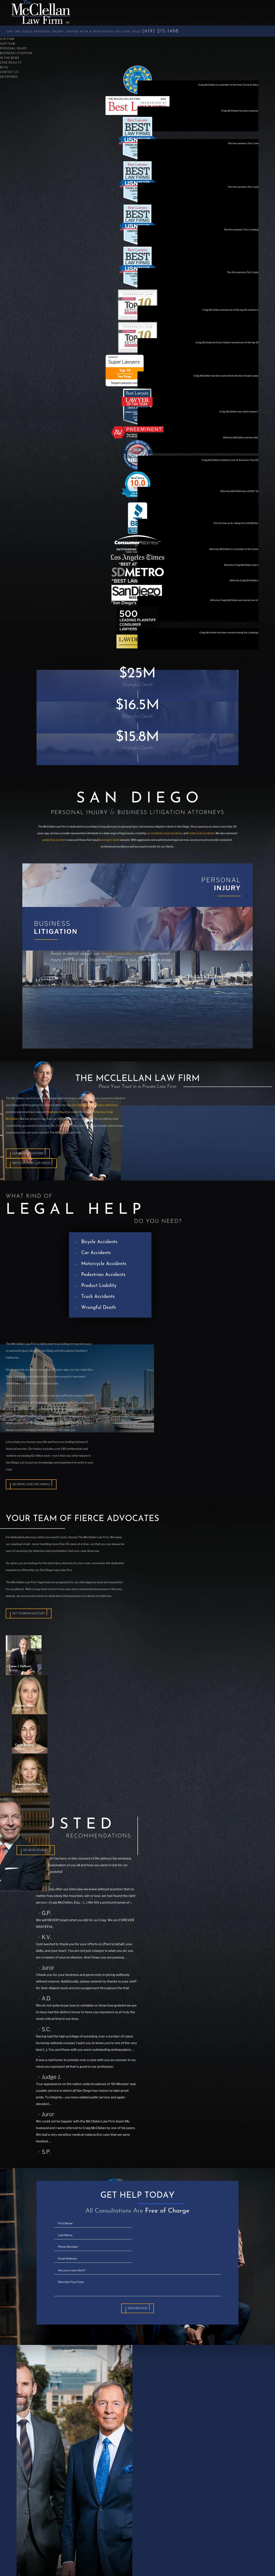 The McClellan Law Firm - San Diego CA Lawyers